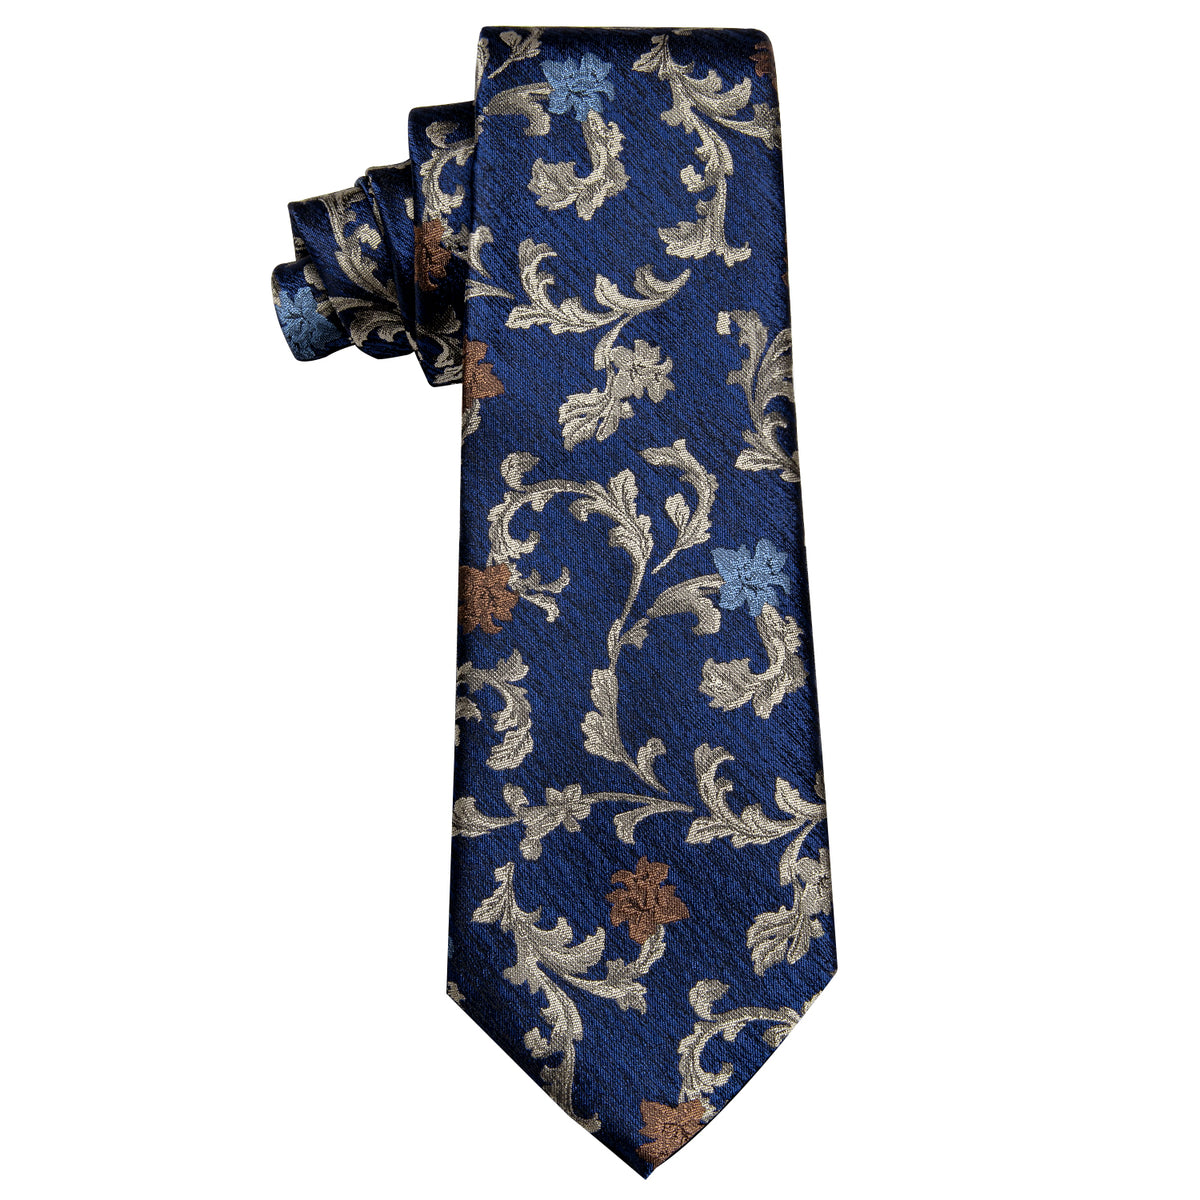 Noble Navy Blue  Champagne Floral Silk Necktie with Golden Tie Clip